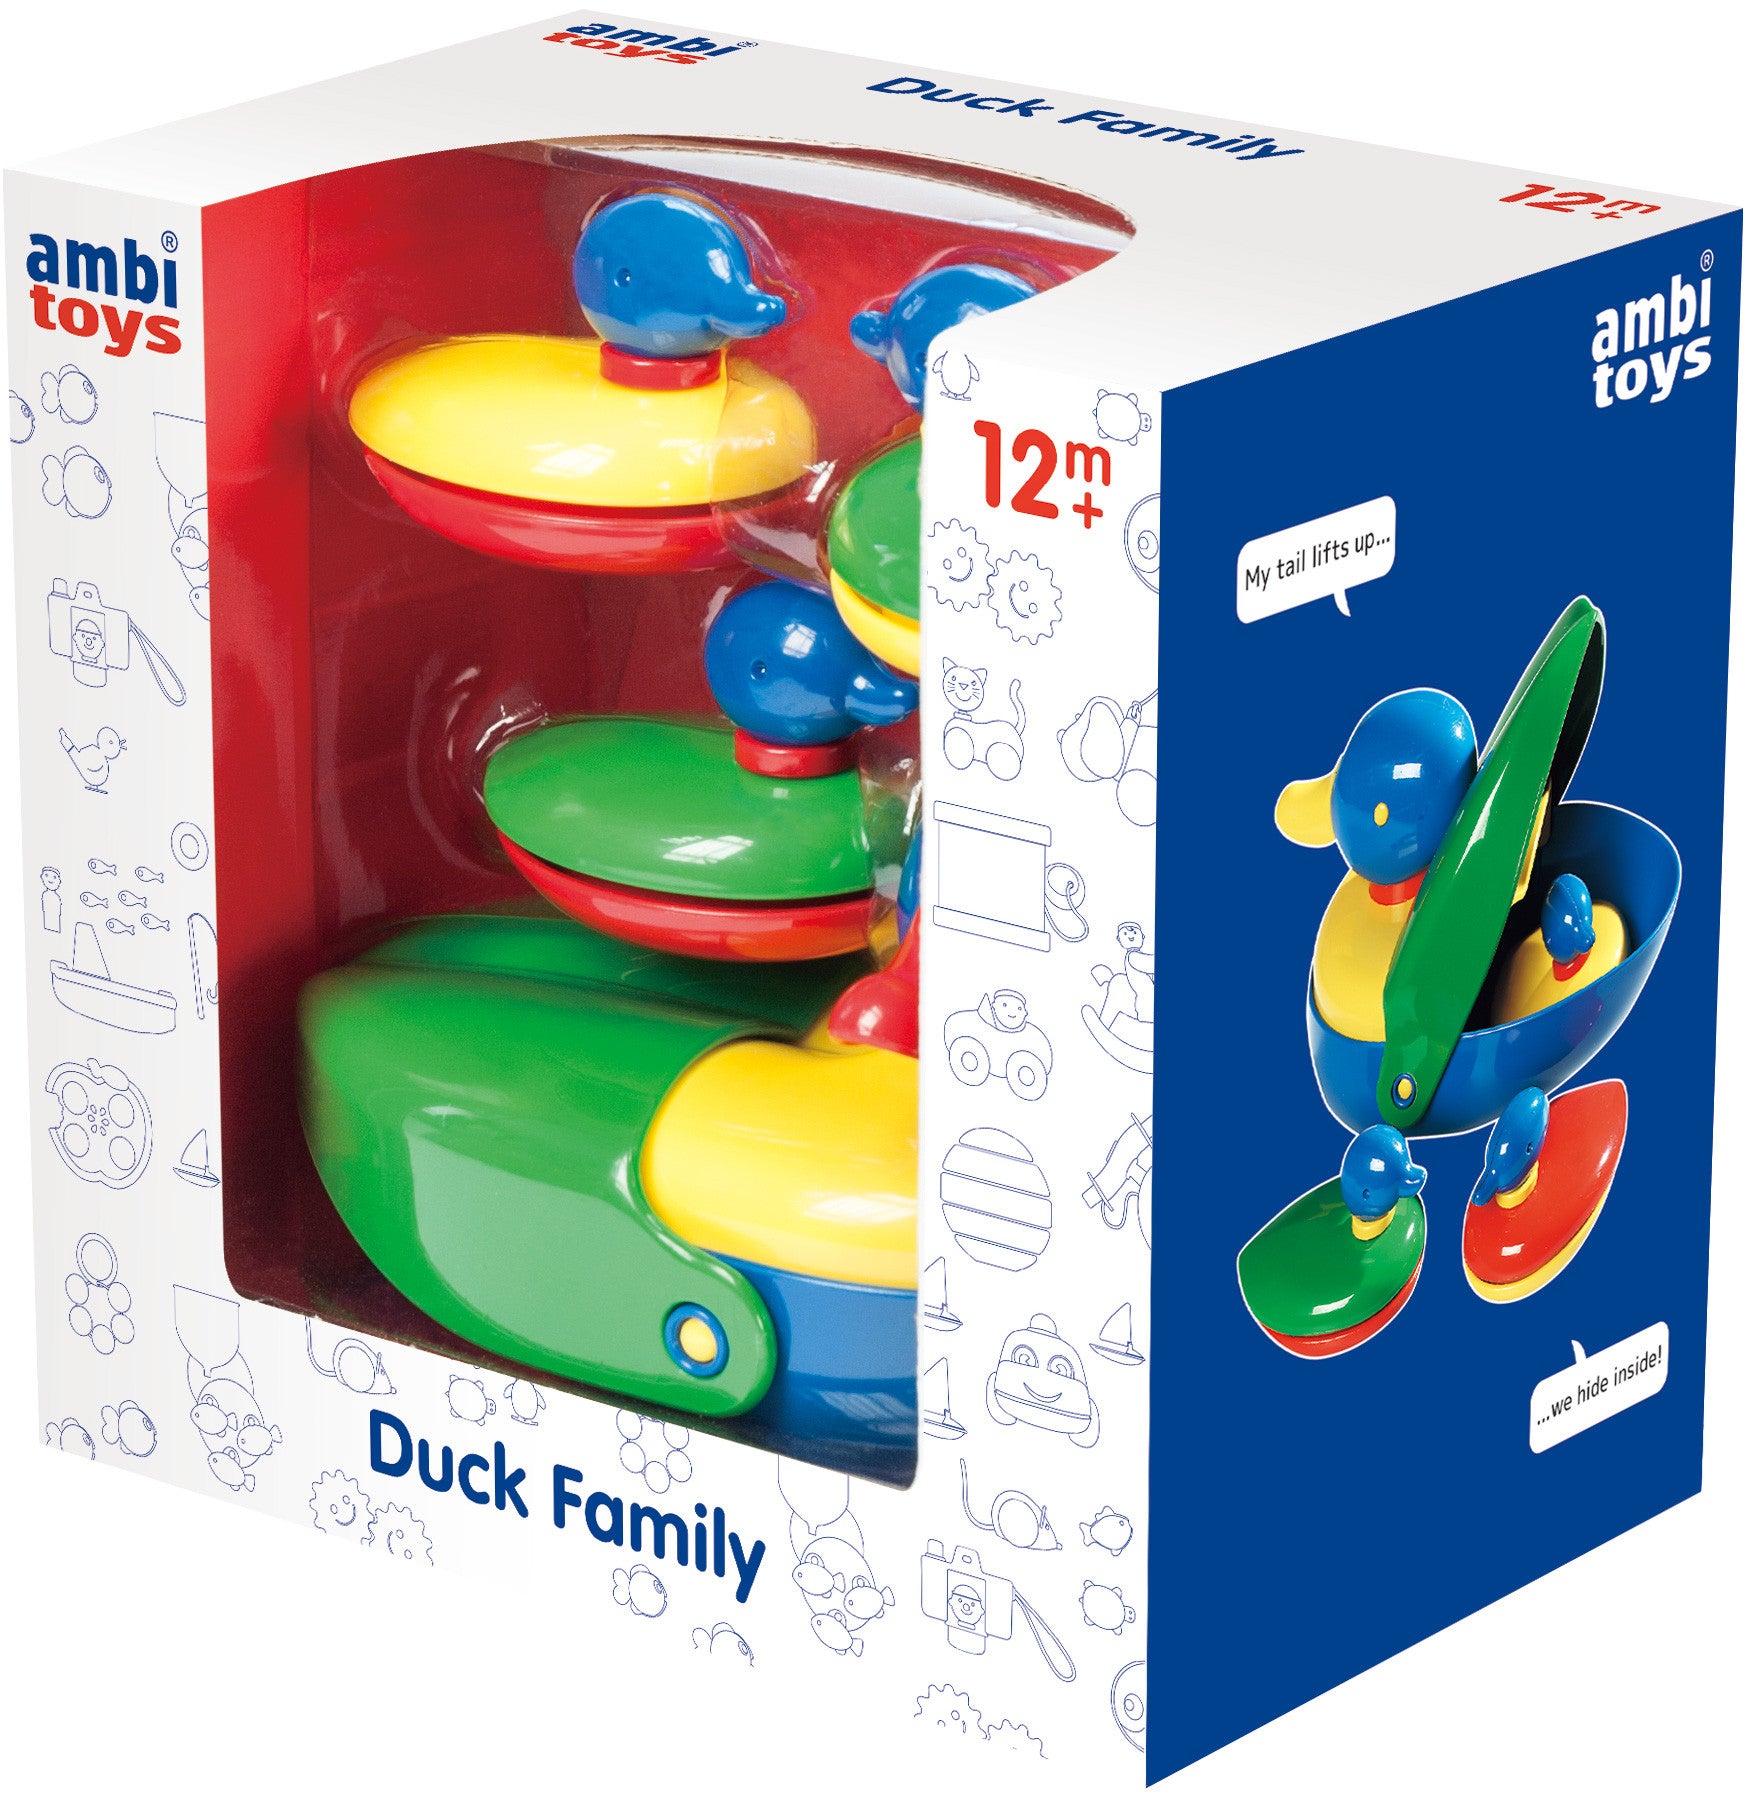 AMBI TOYS Duck Family Bath